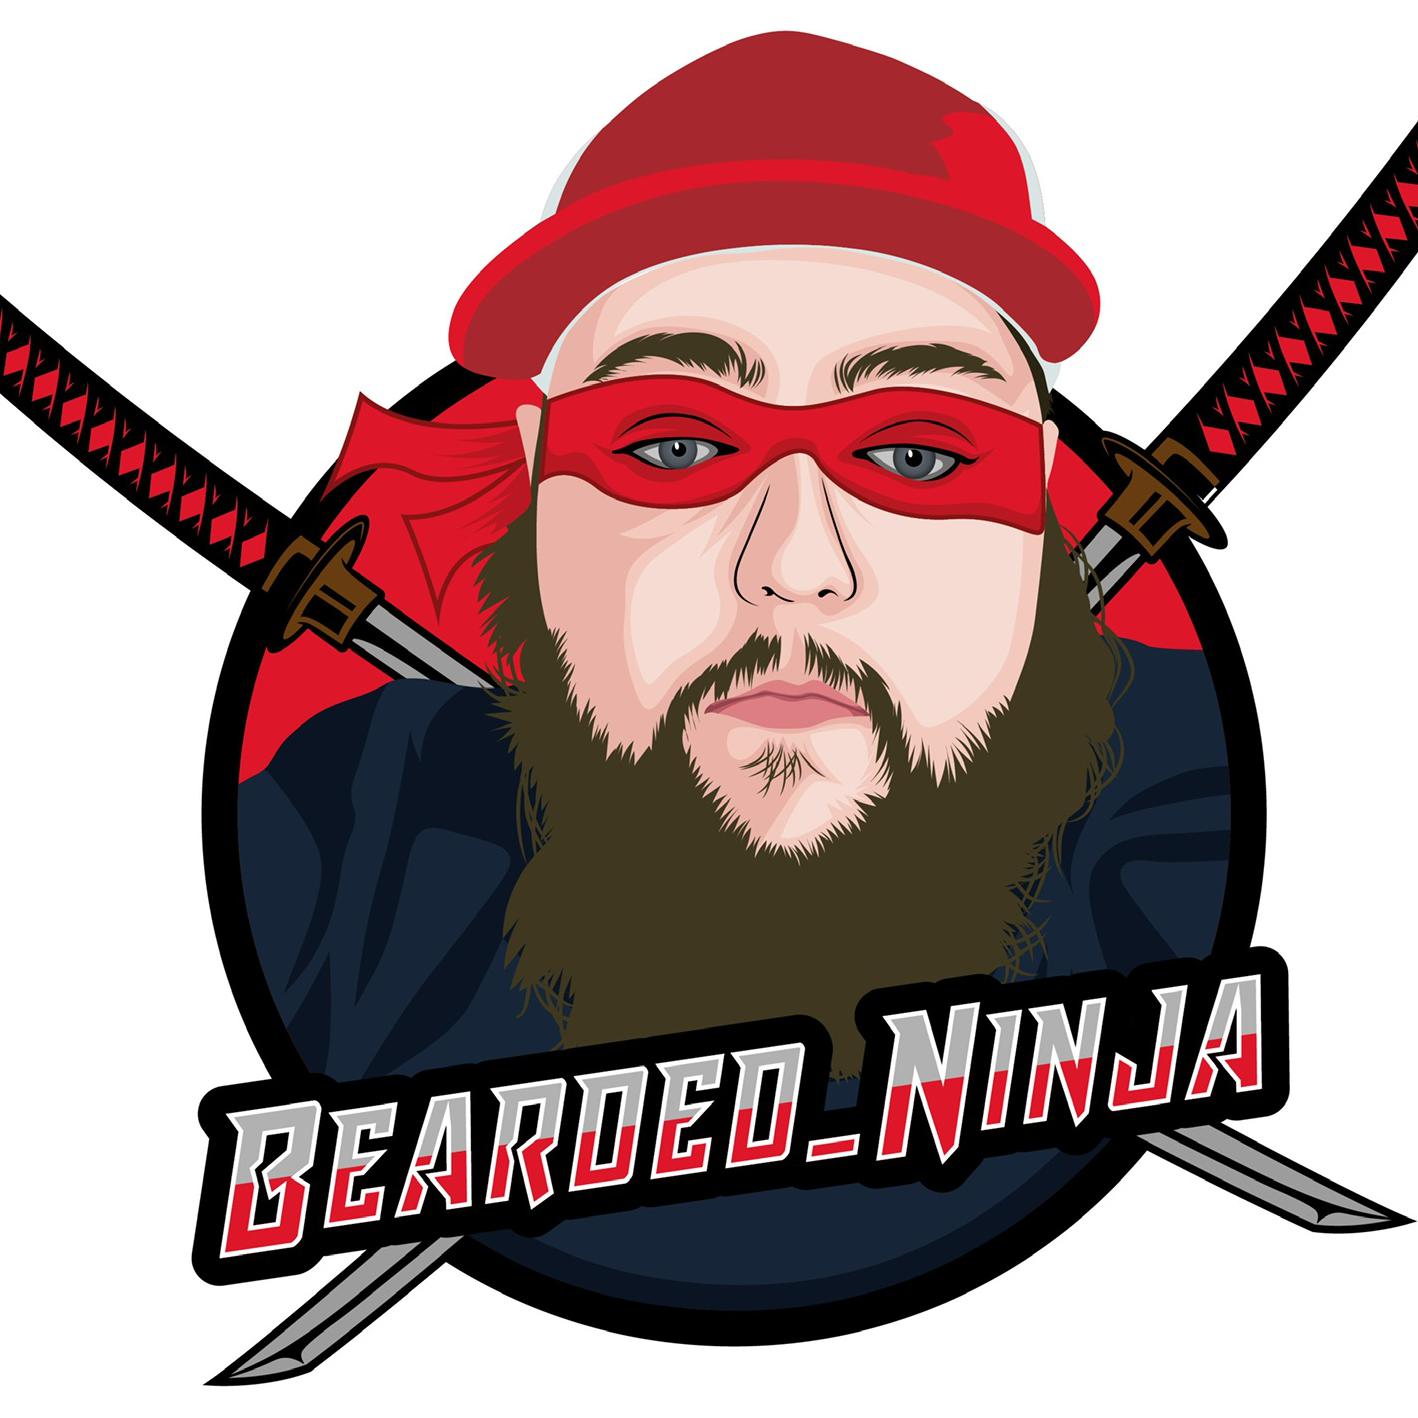 Bearded_Ninja